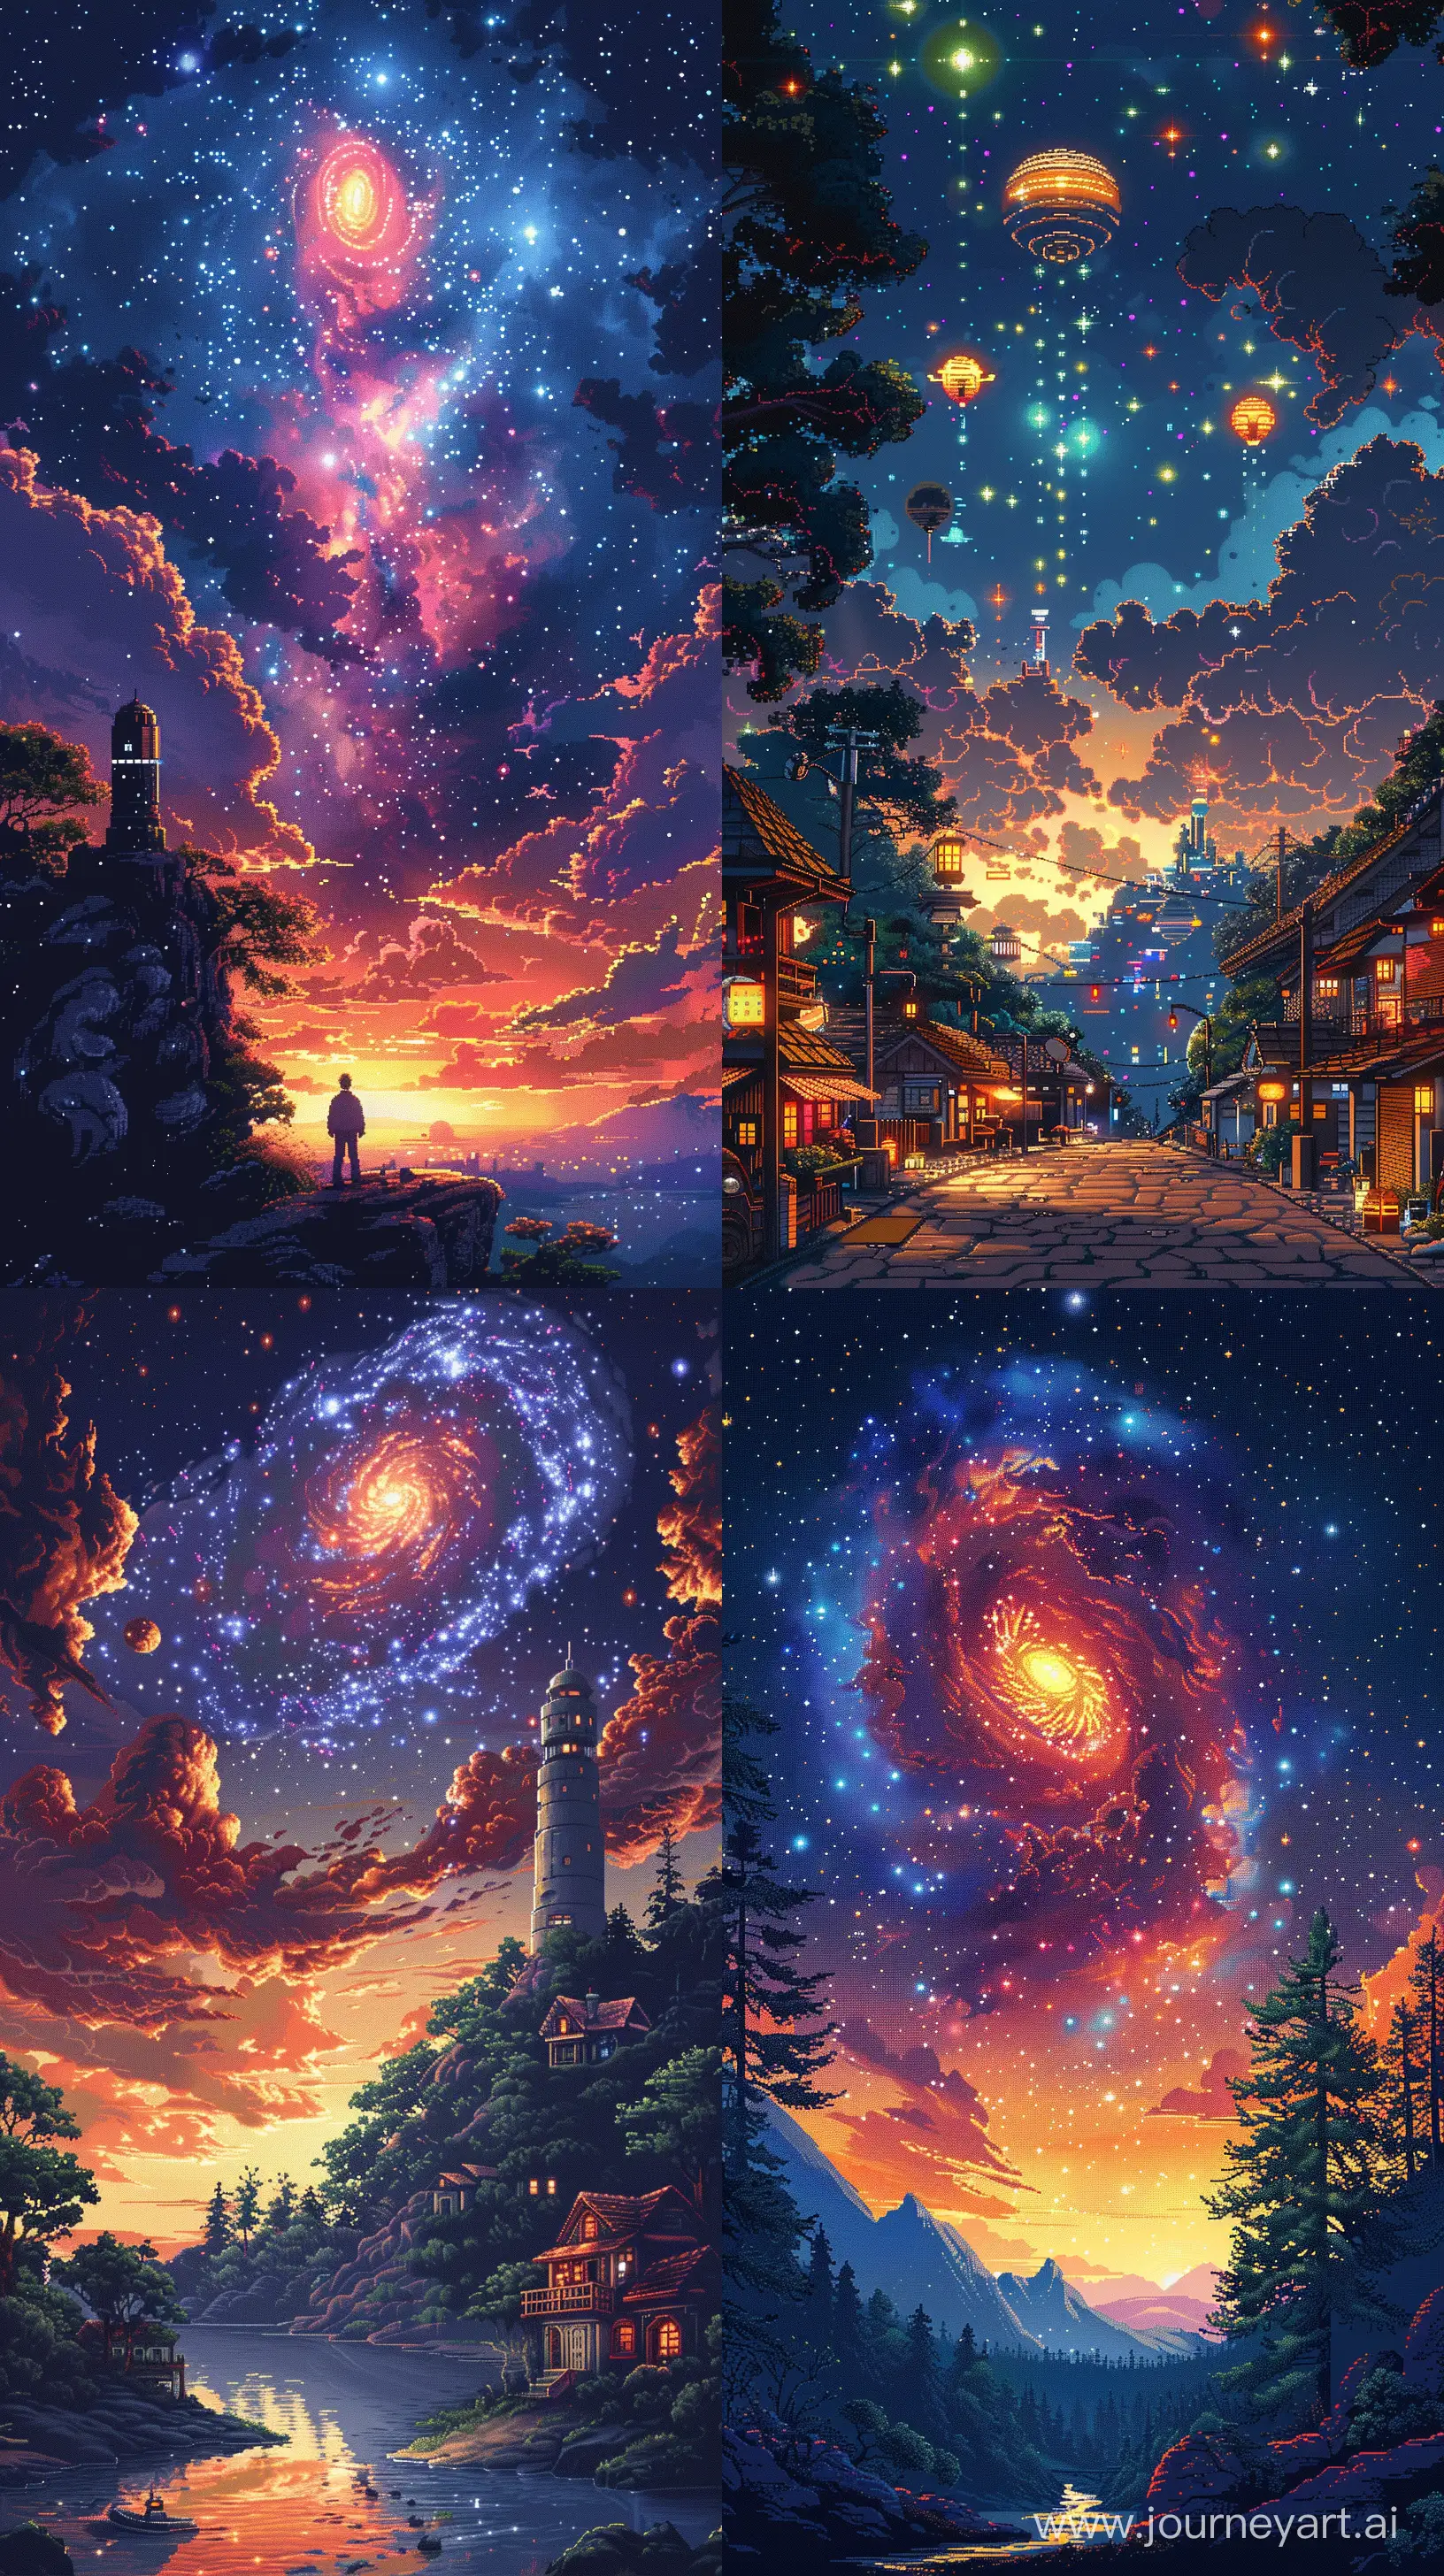 Nostalgic-1990s-Childhood-Galaxy-Pixel-Art-Daytime-Adventure-in-Retro-Colors